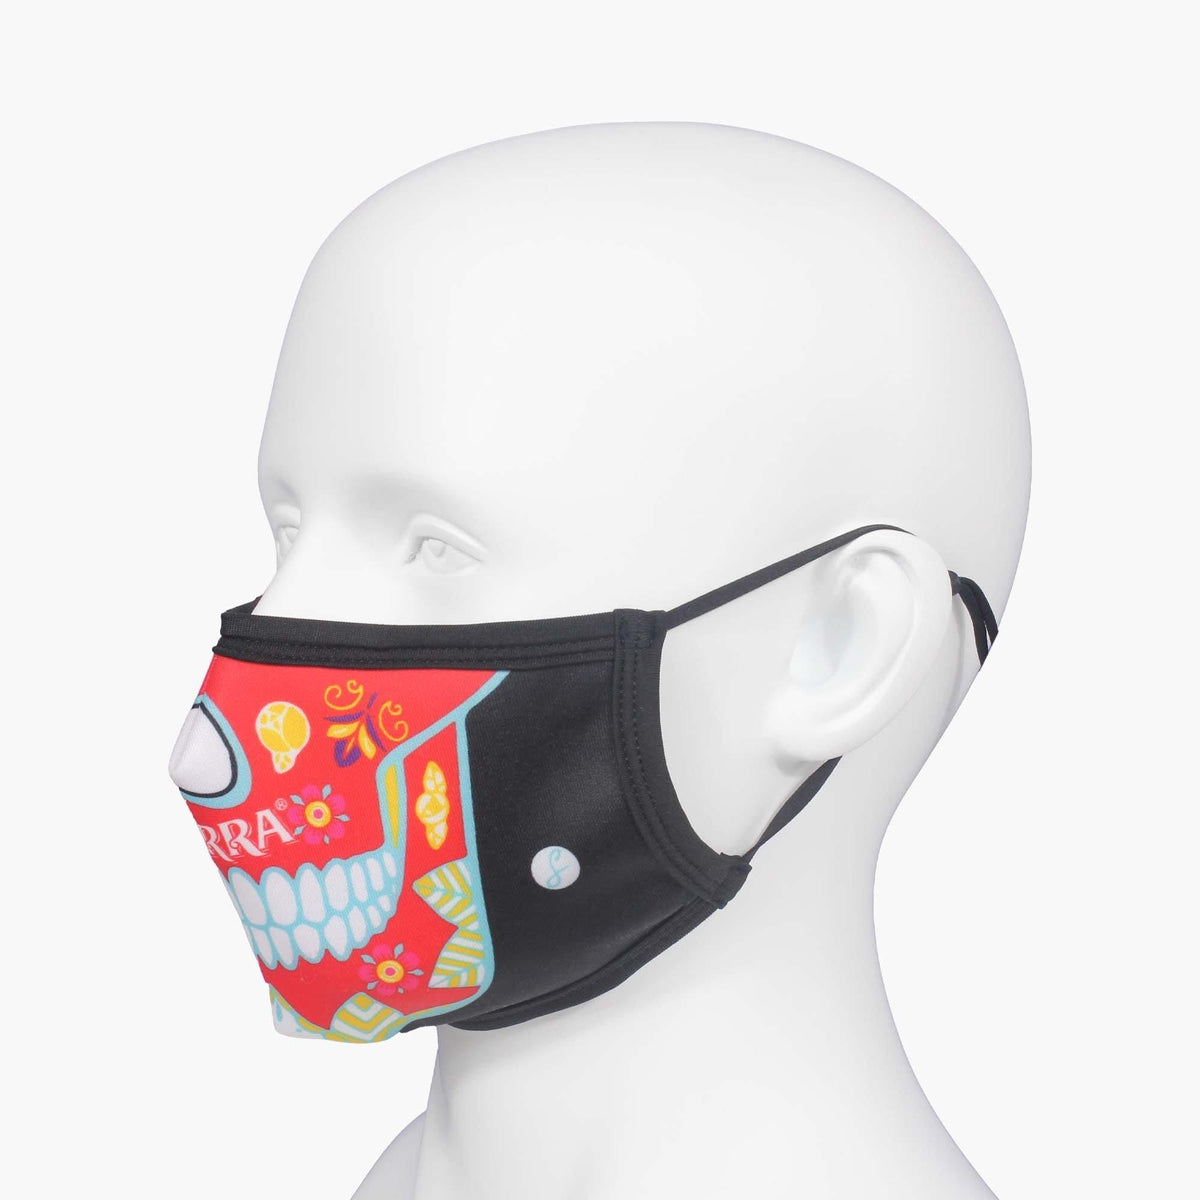 Custom Face Masks